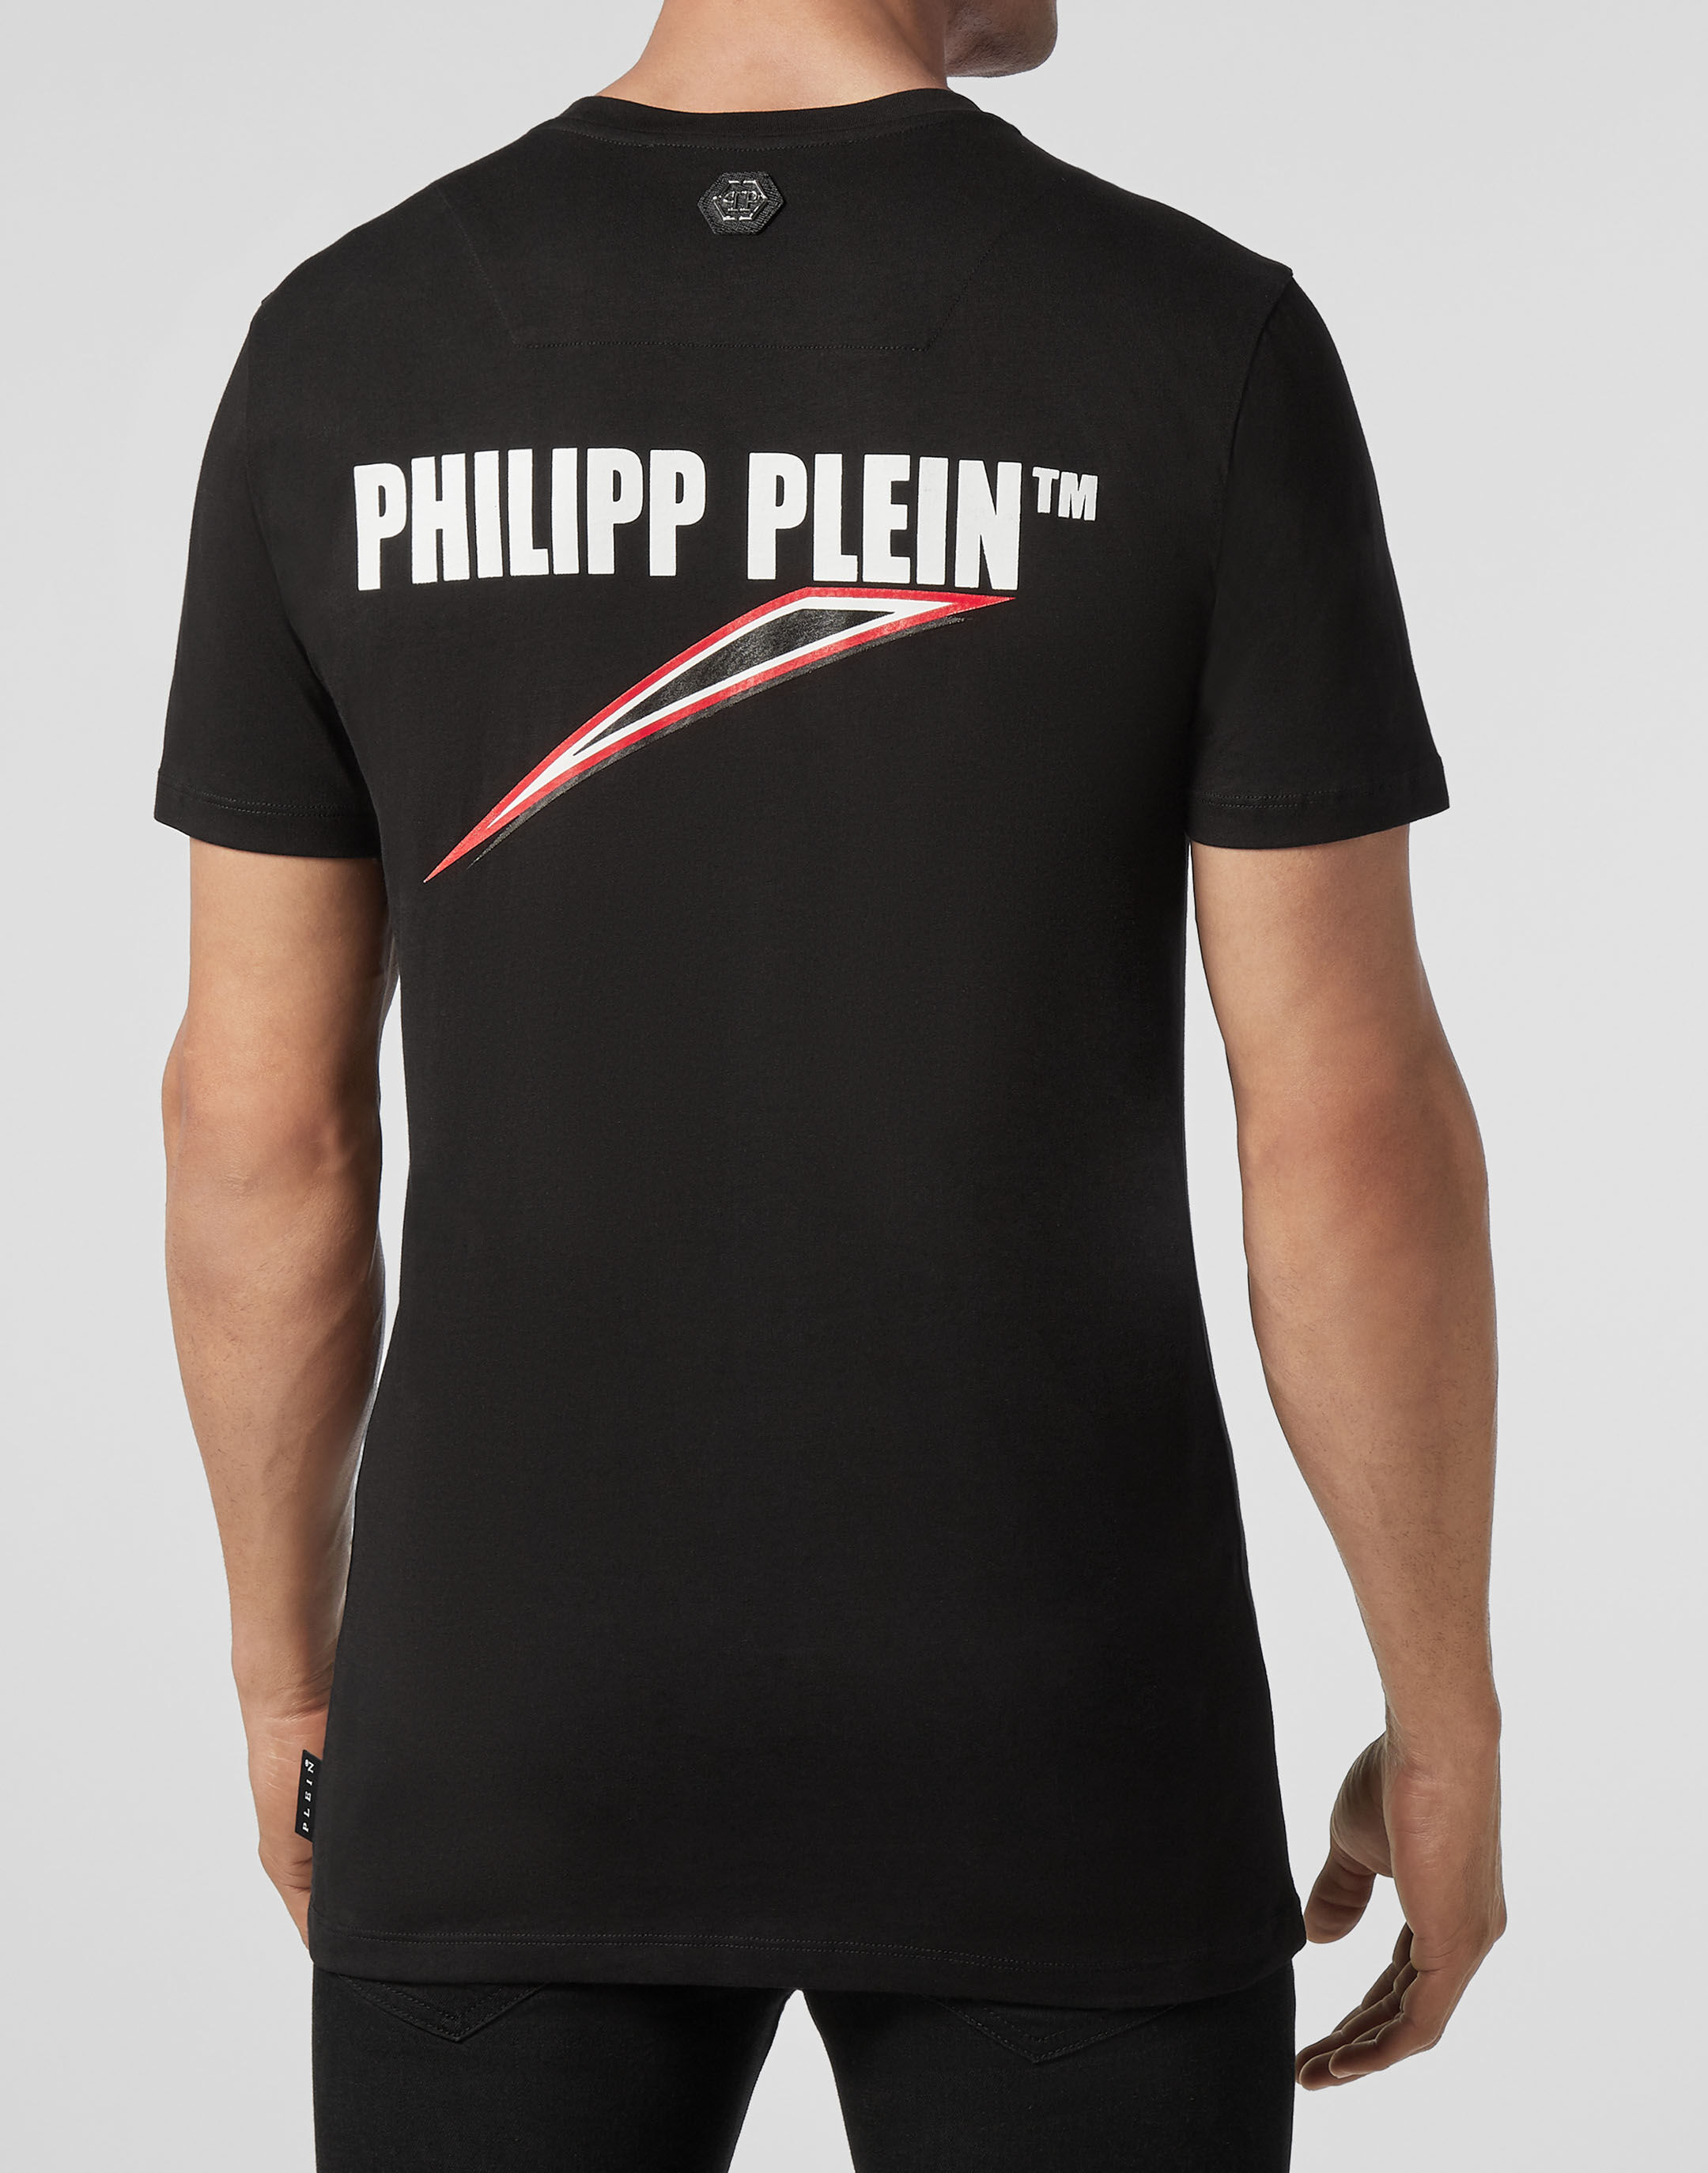 philip plane t shirt